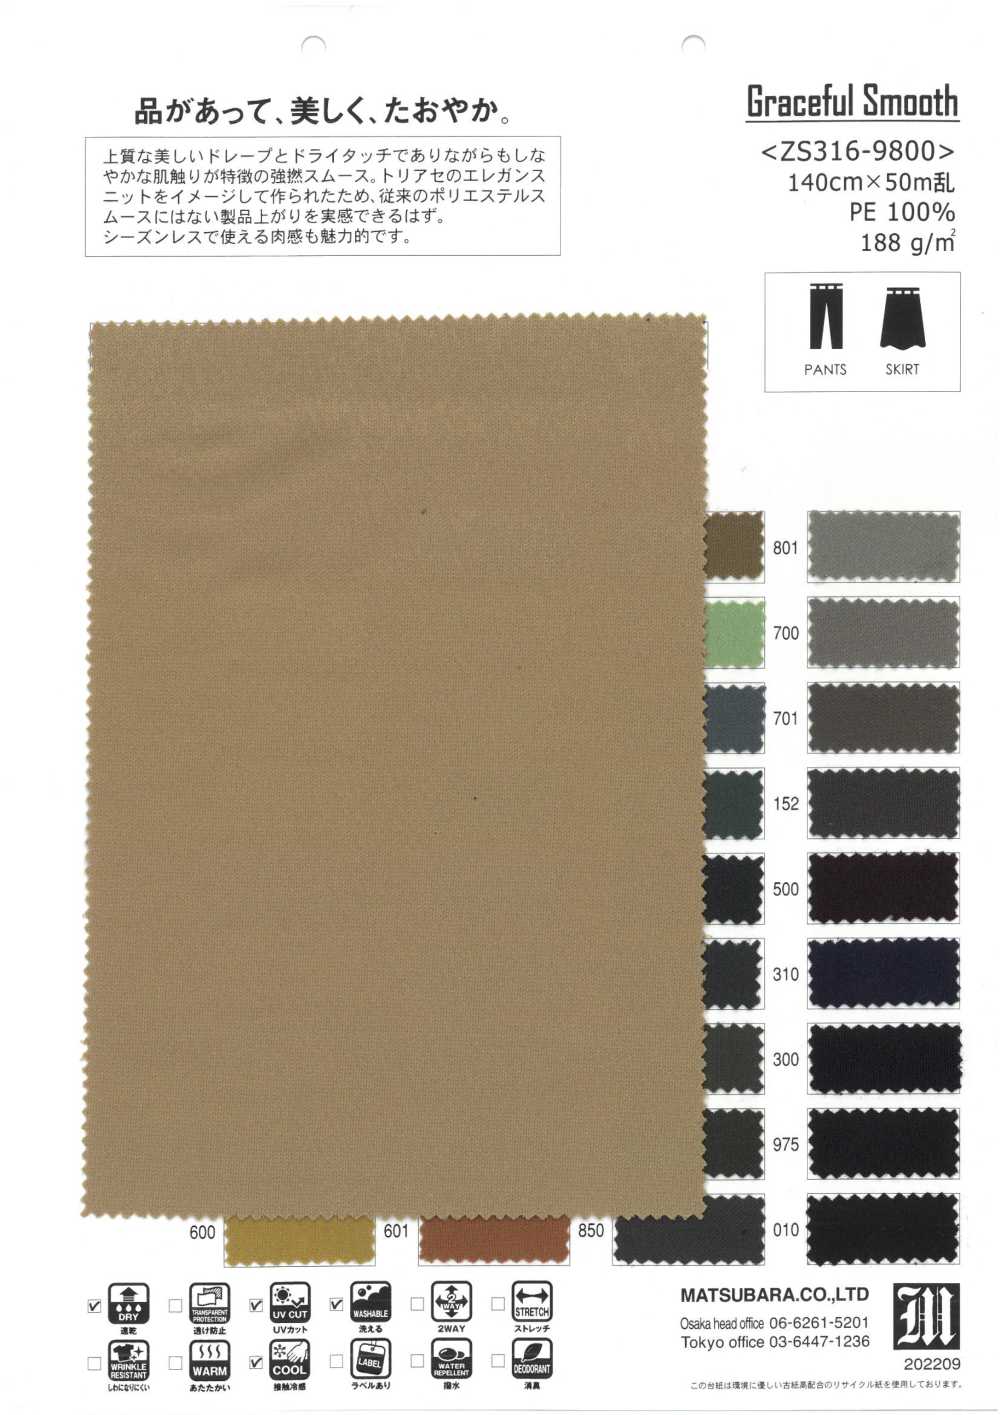 ZS316-9800 Anmutig Glatt[Textilgewebe] Matsubara